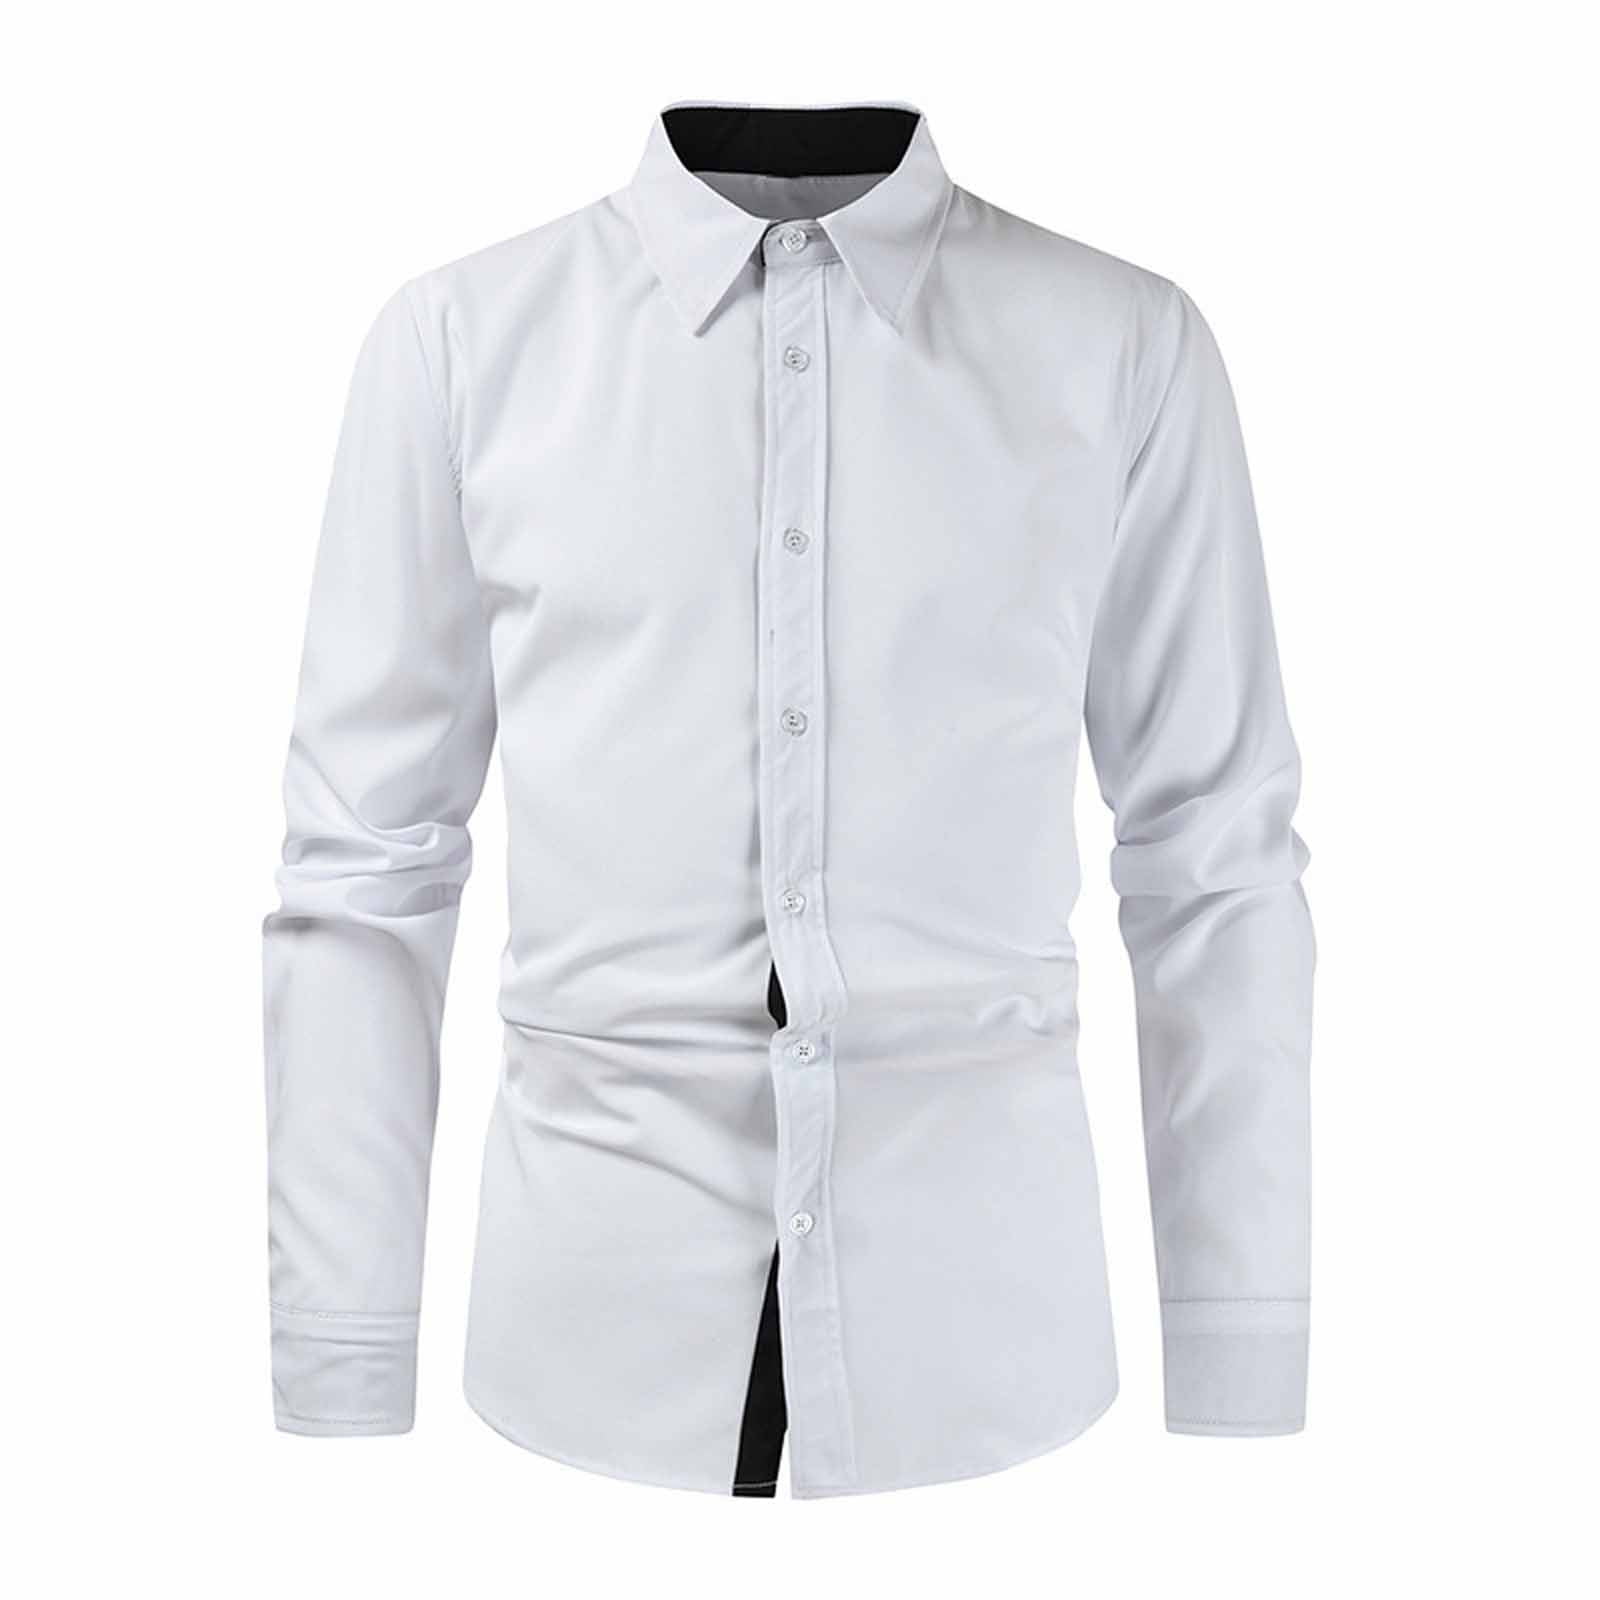 Men's Dress Shirts Clearance Long Sleeve Smart Casual Plain Shirt ...